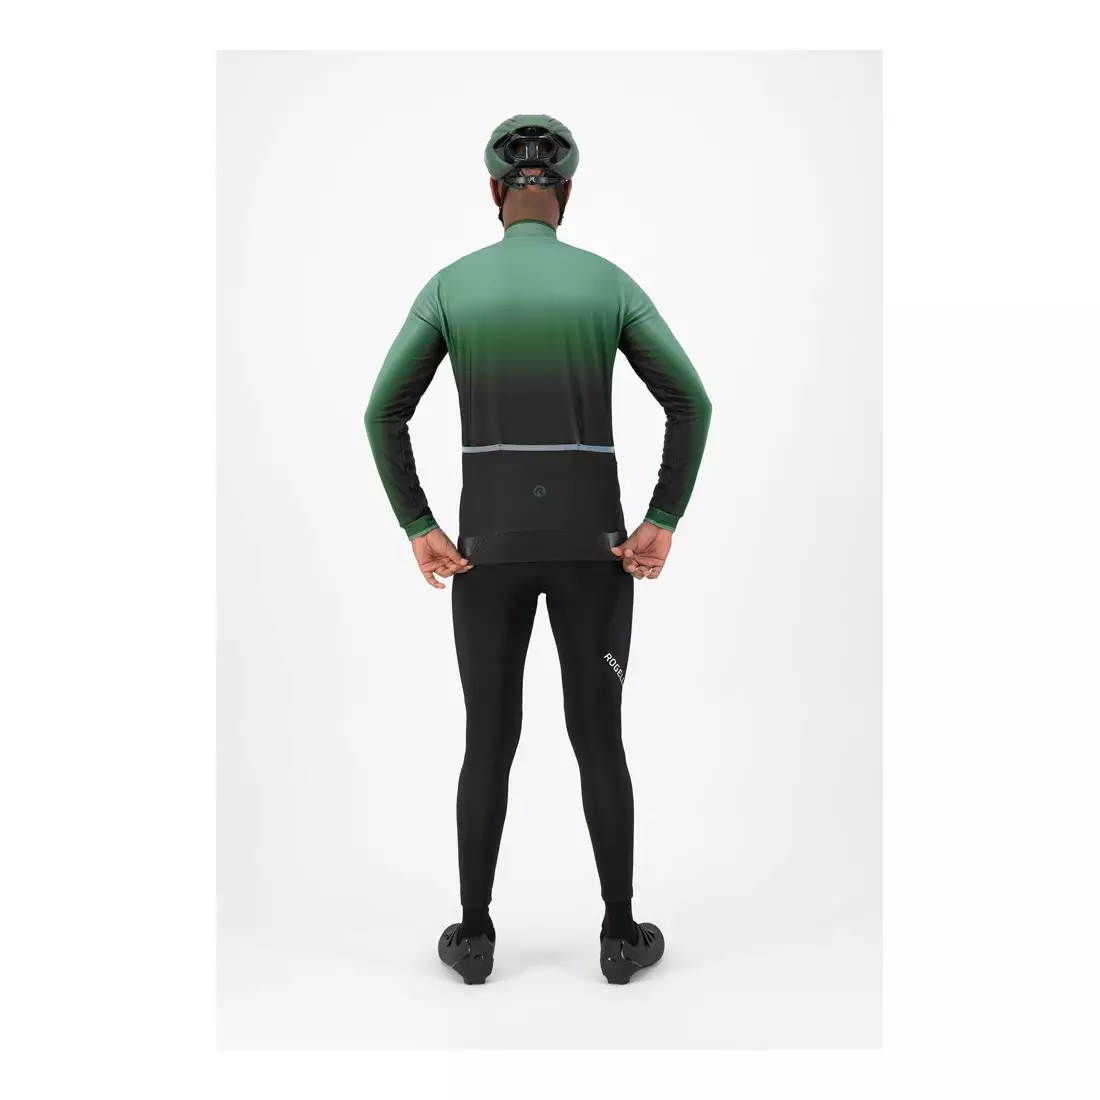 ROGELLI winter cycling jacket HORIZON green ROG351045